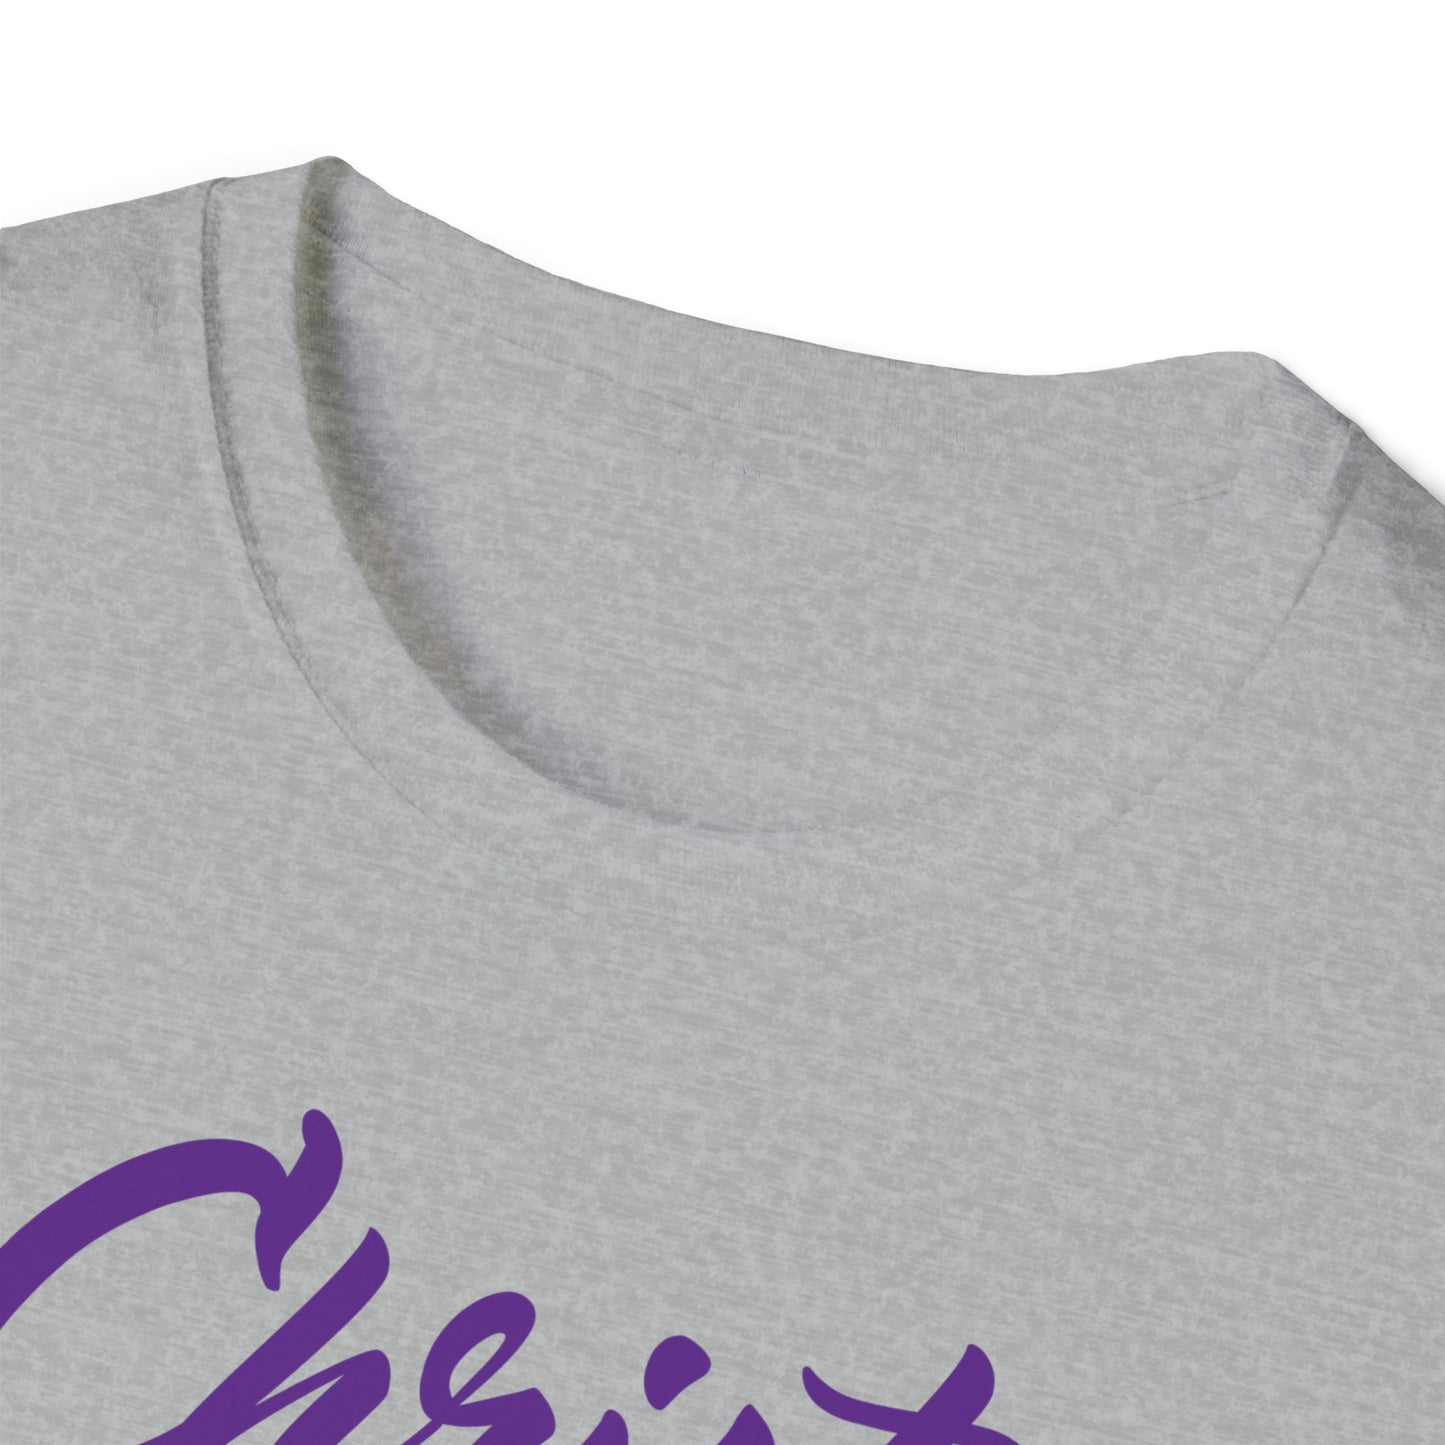 Christ Influencer front SELFLESS back | Unisex Softstyle T-Shirt